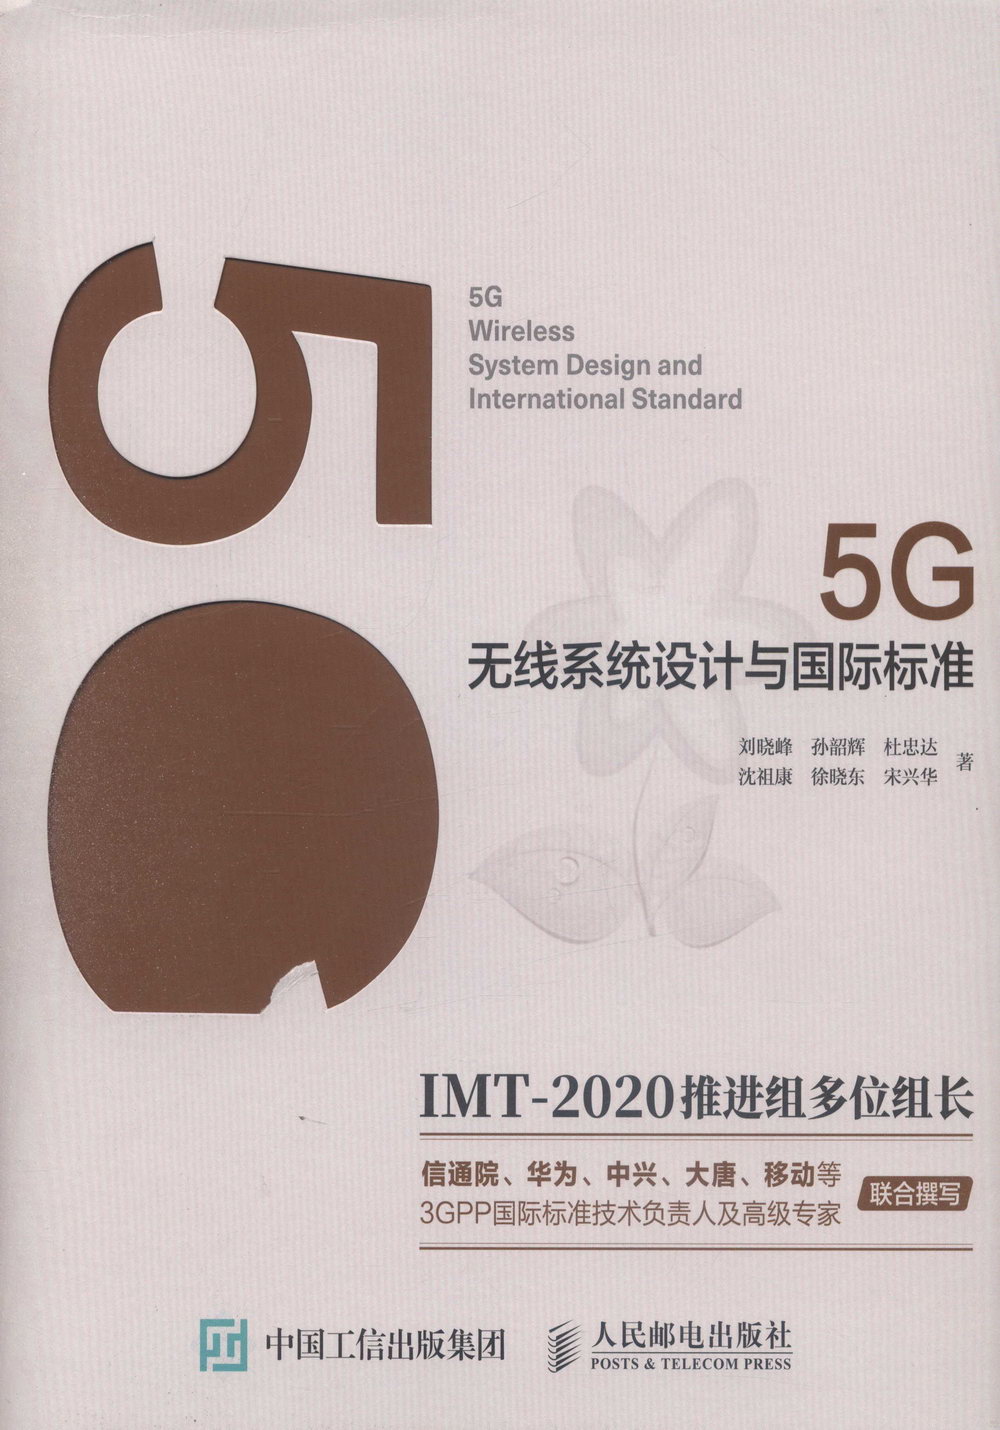 5G無線系統設計與國際標準